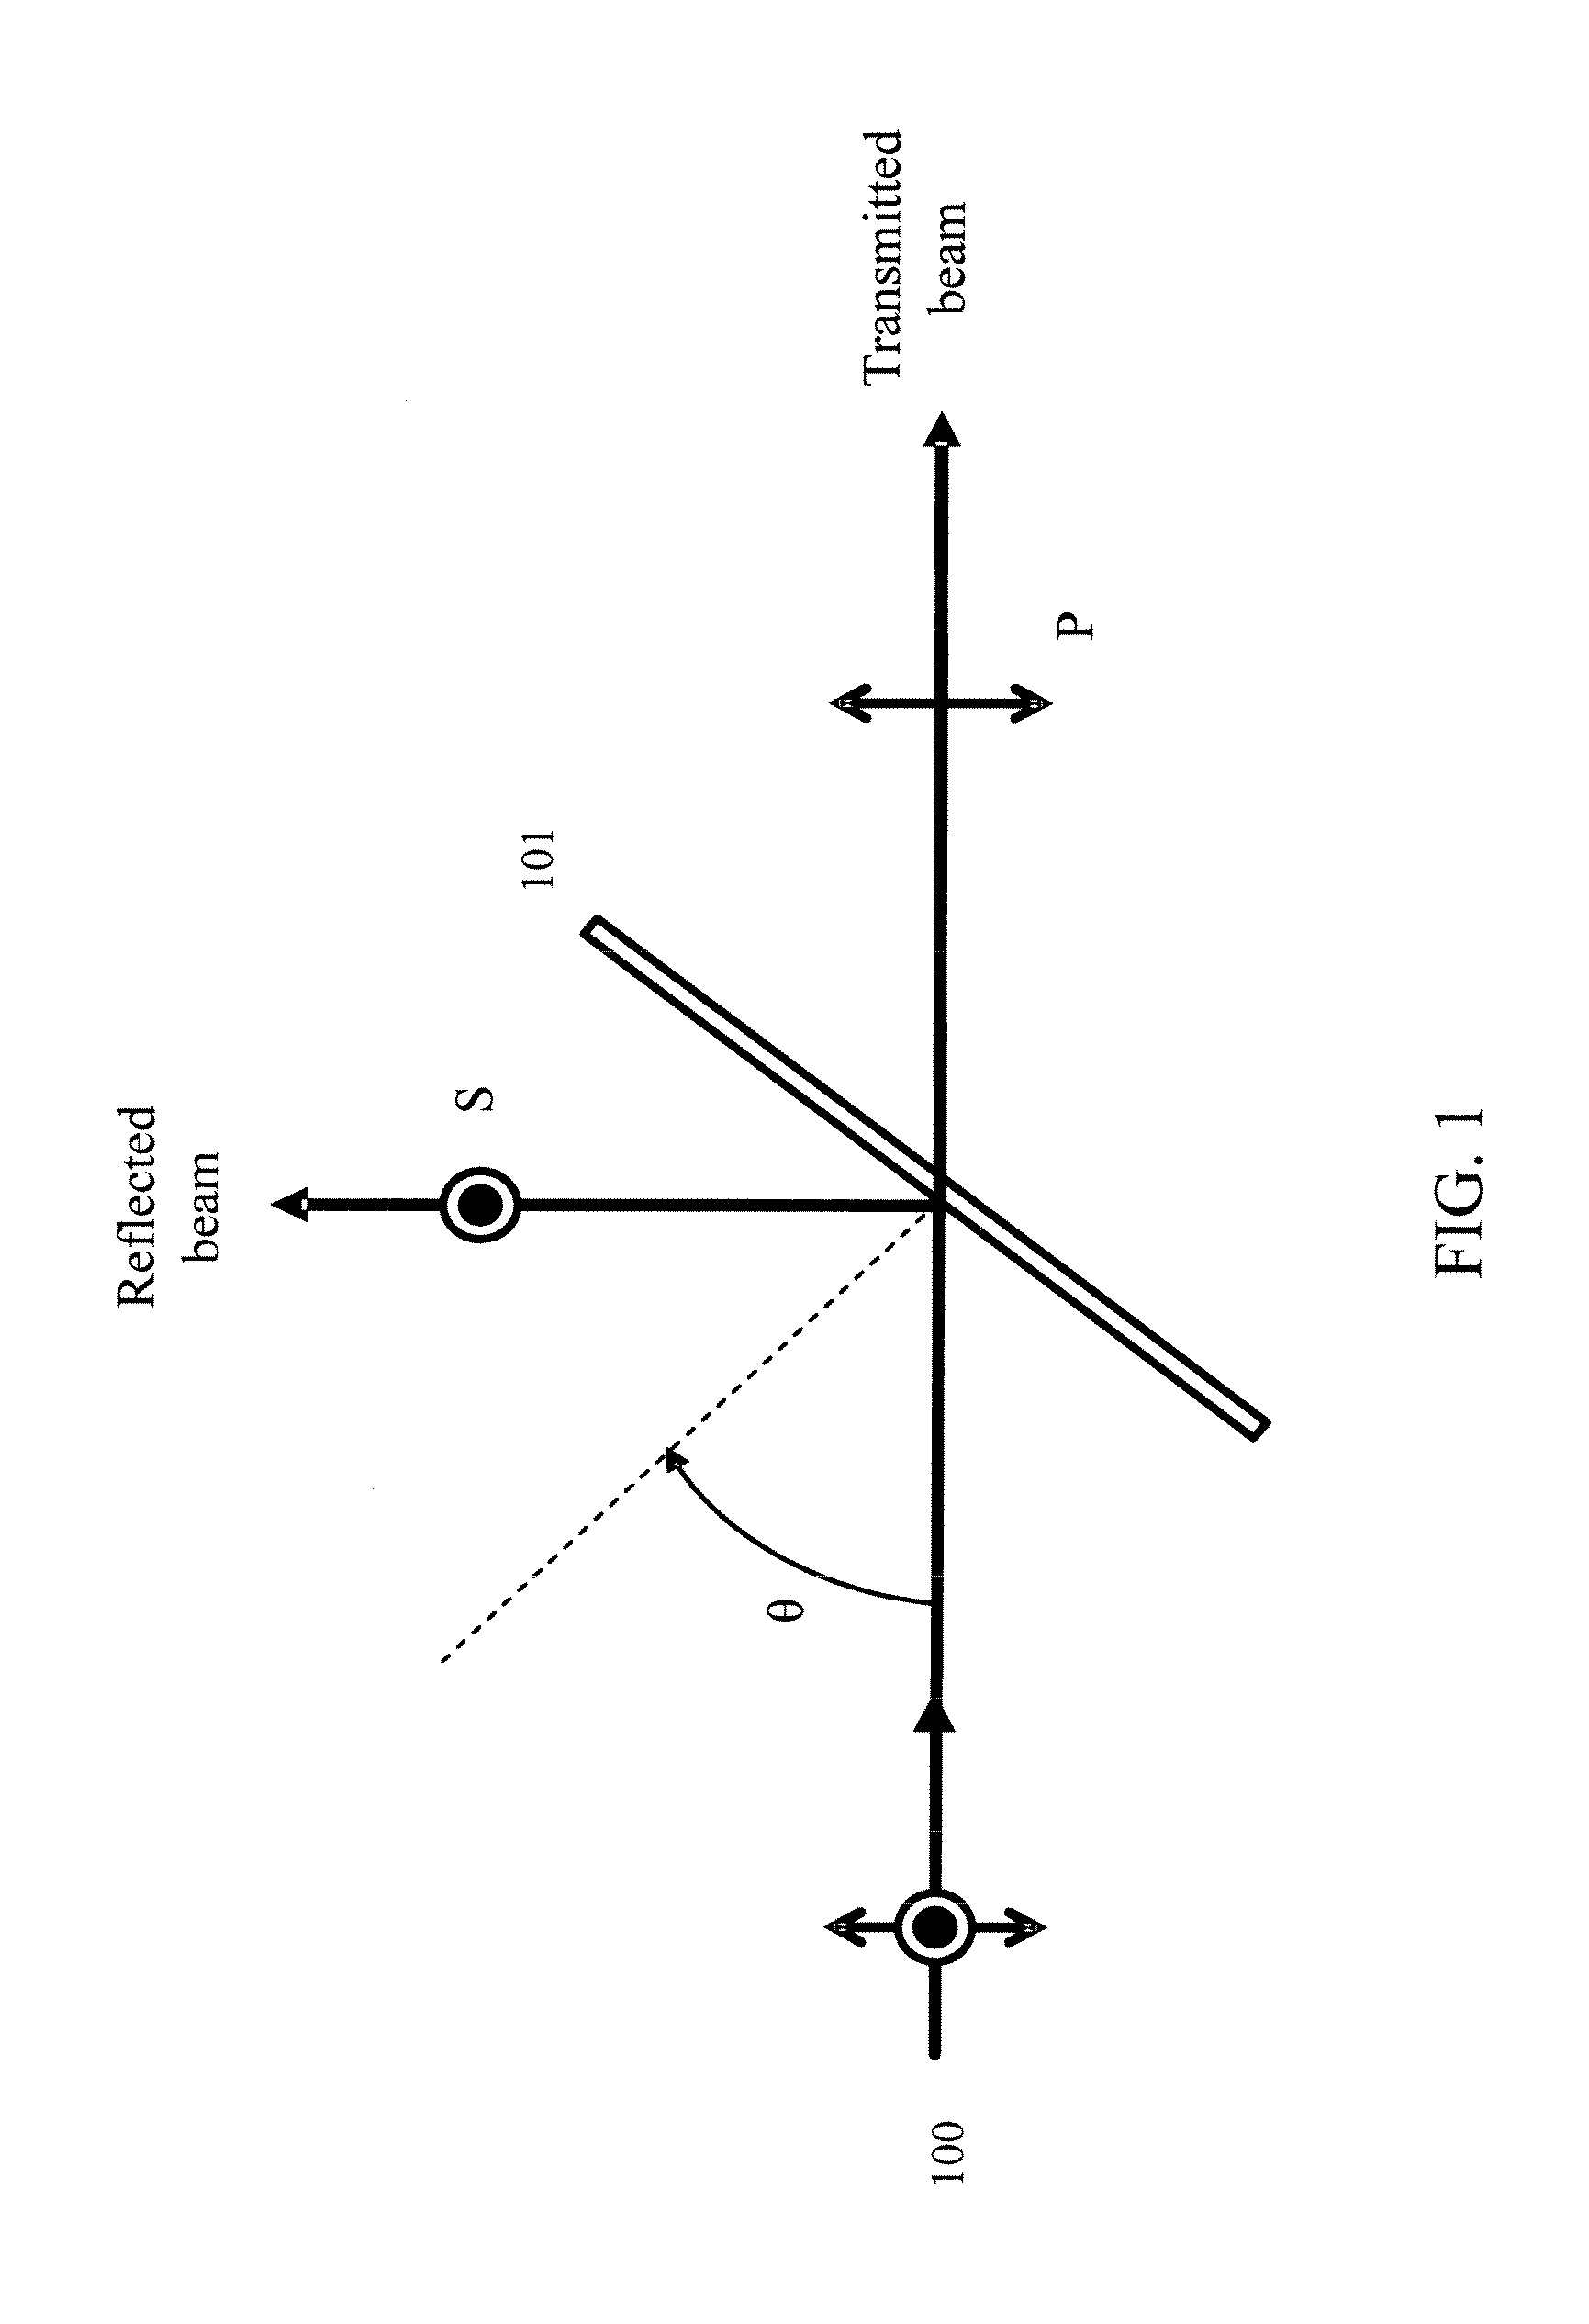 Composite Polarizer With Adjustable Polarization Angles